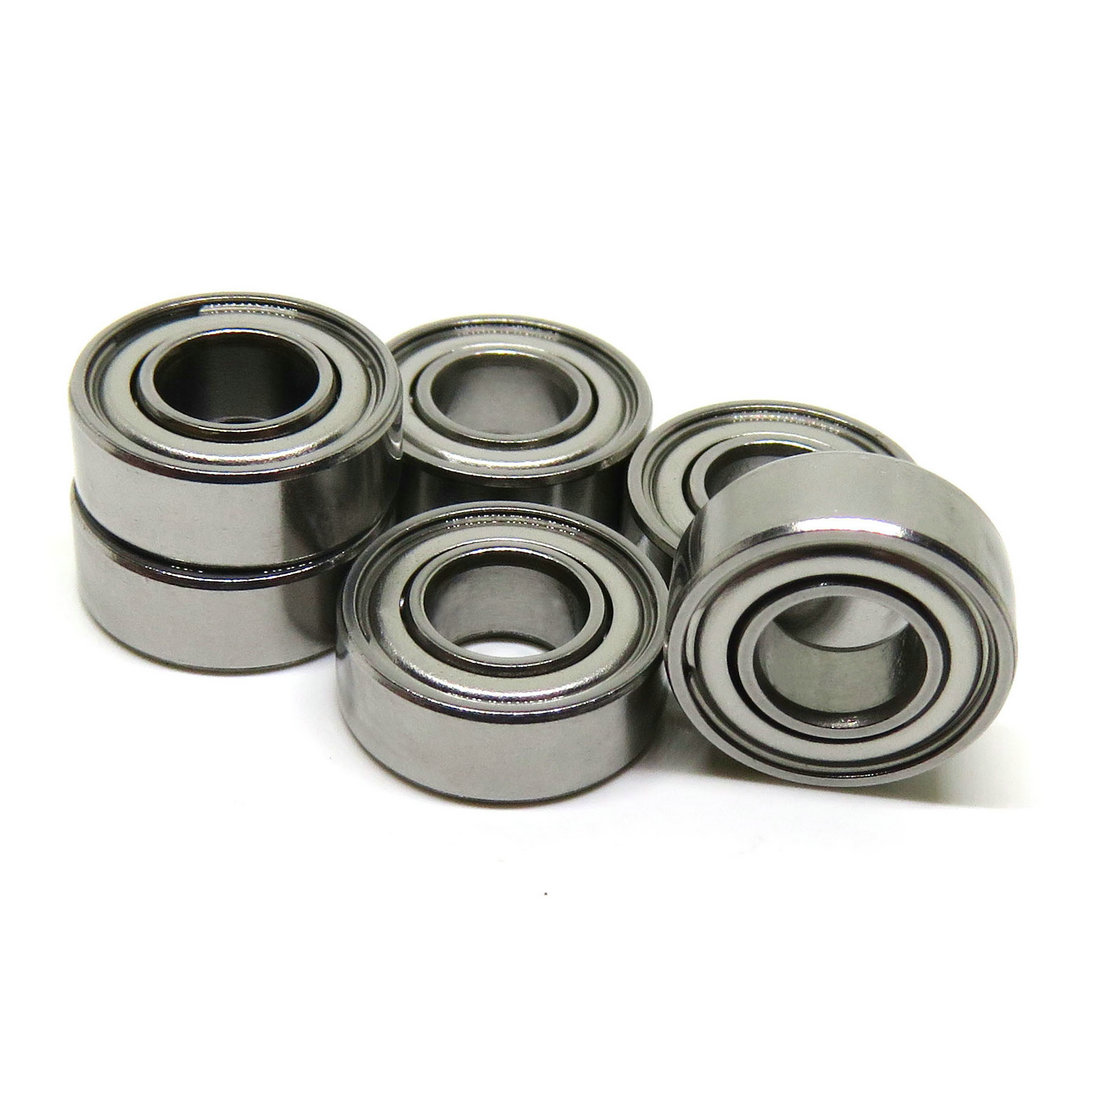 SMR115C-ZZ stainless steel high speed 5x11x4mm best ceramic bearings for rc cars